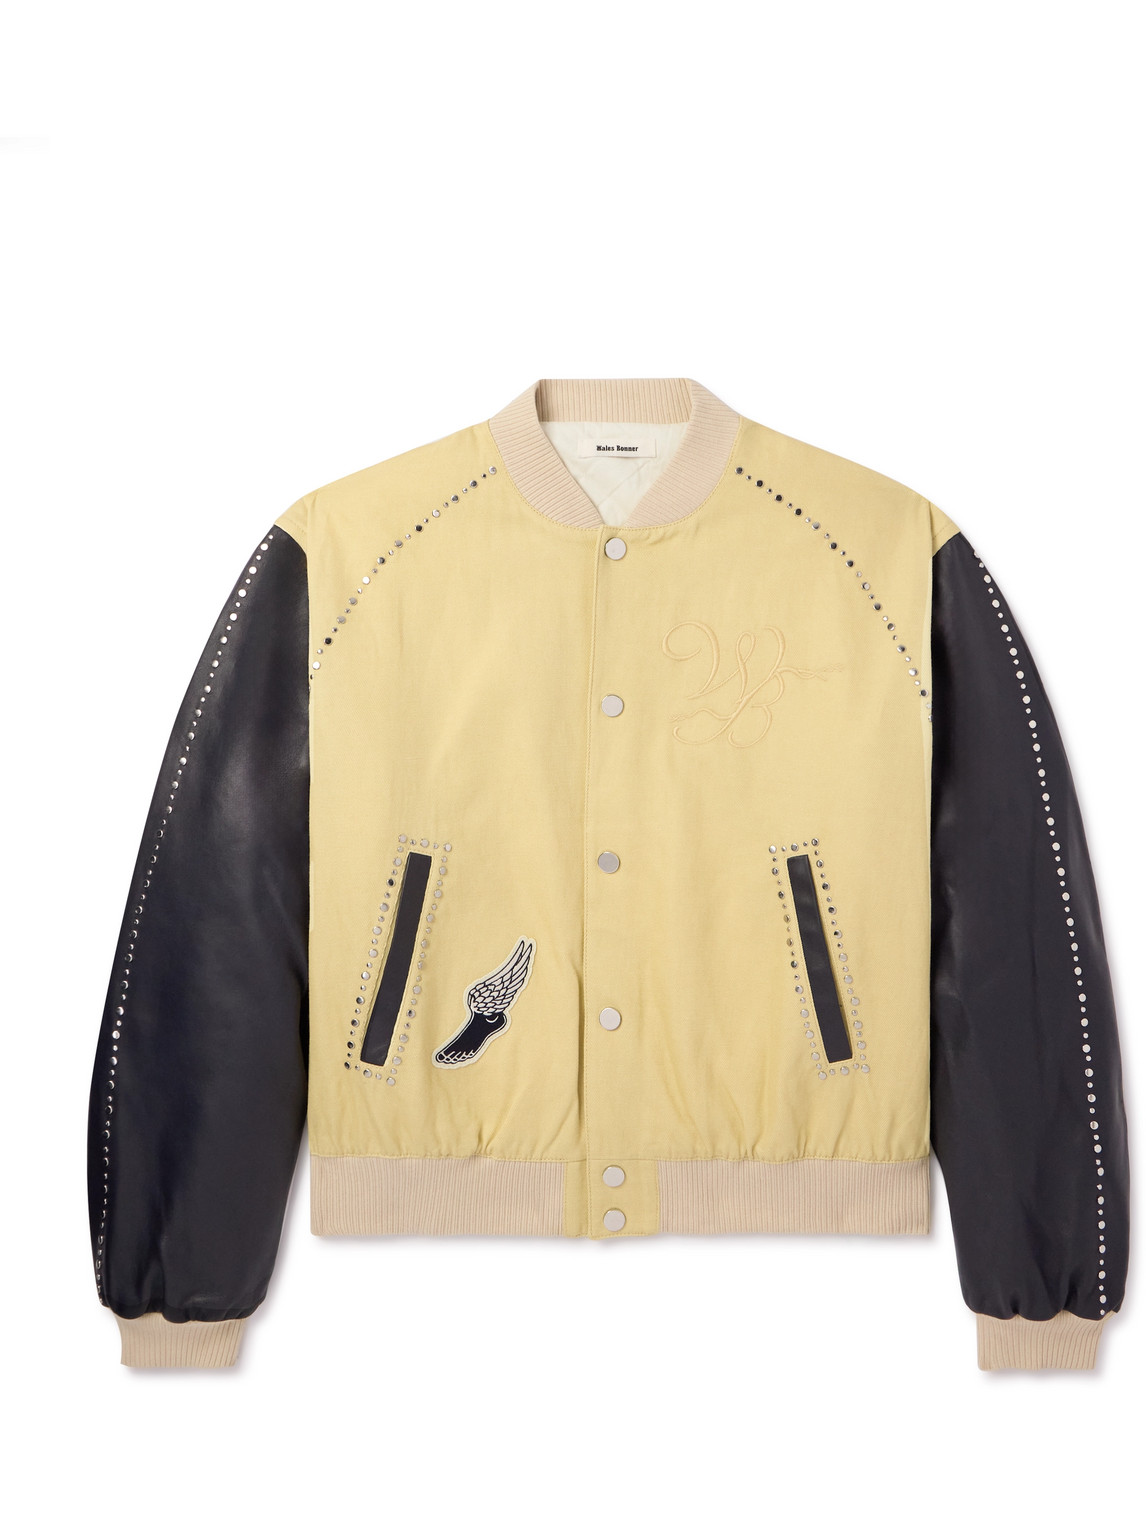 Sky Leather-Trimmed Cotton and Linen-Blend Varsity Jacket